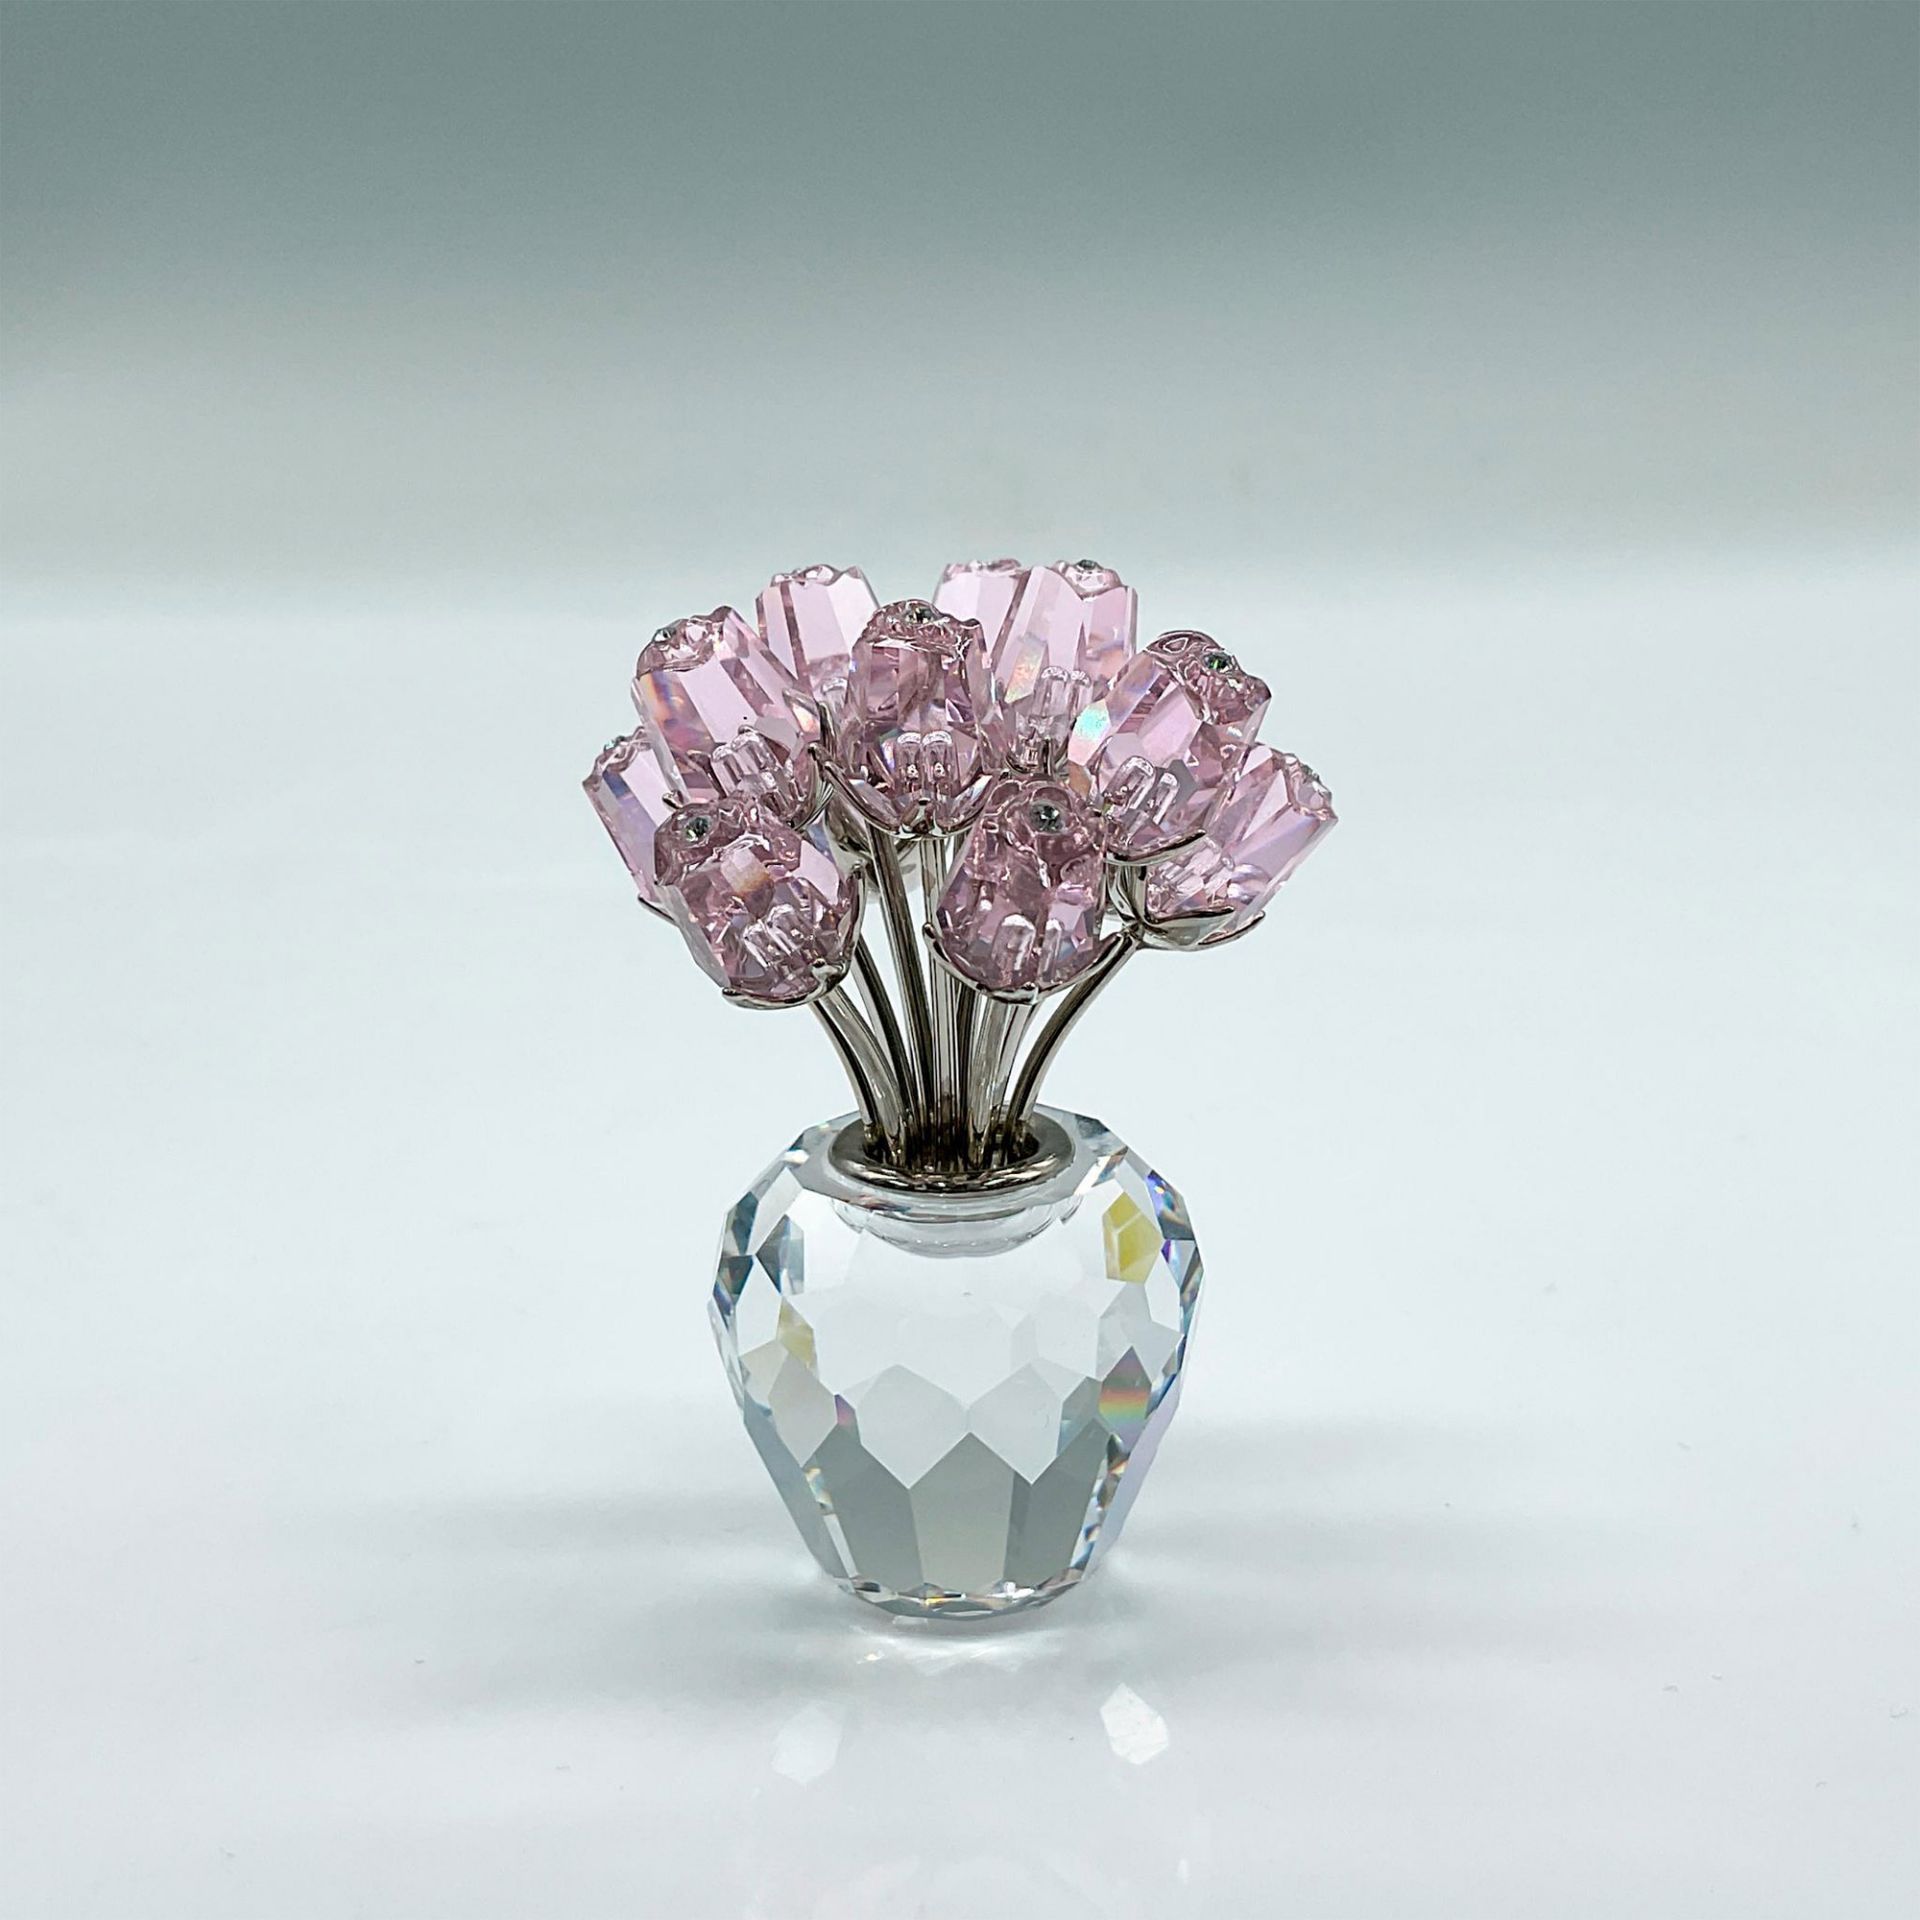 Swarovski Crystal Figurine, Pink Roses with Rhodium Stems - Image 2 of 4